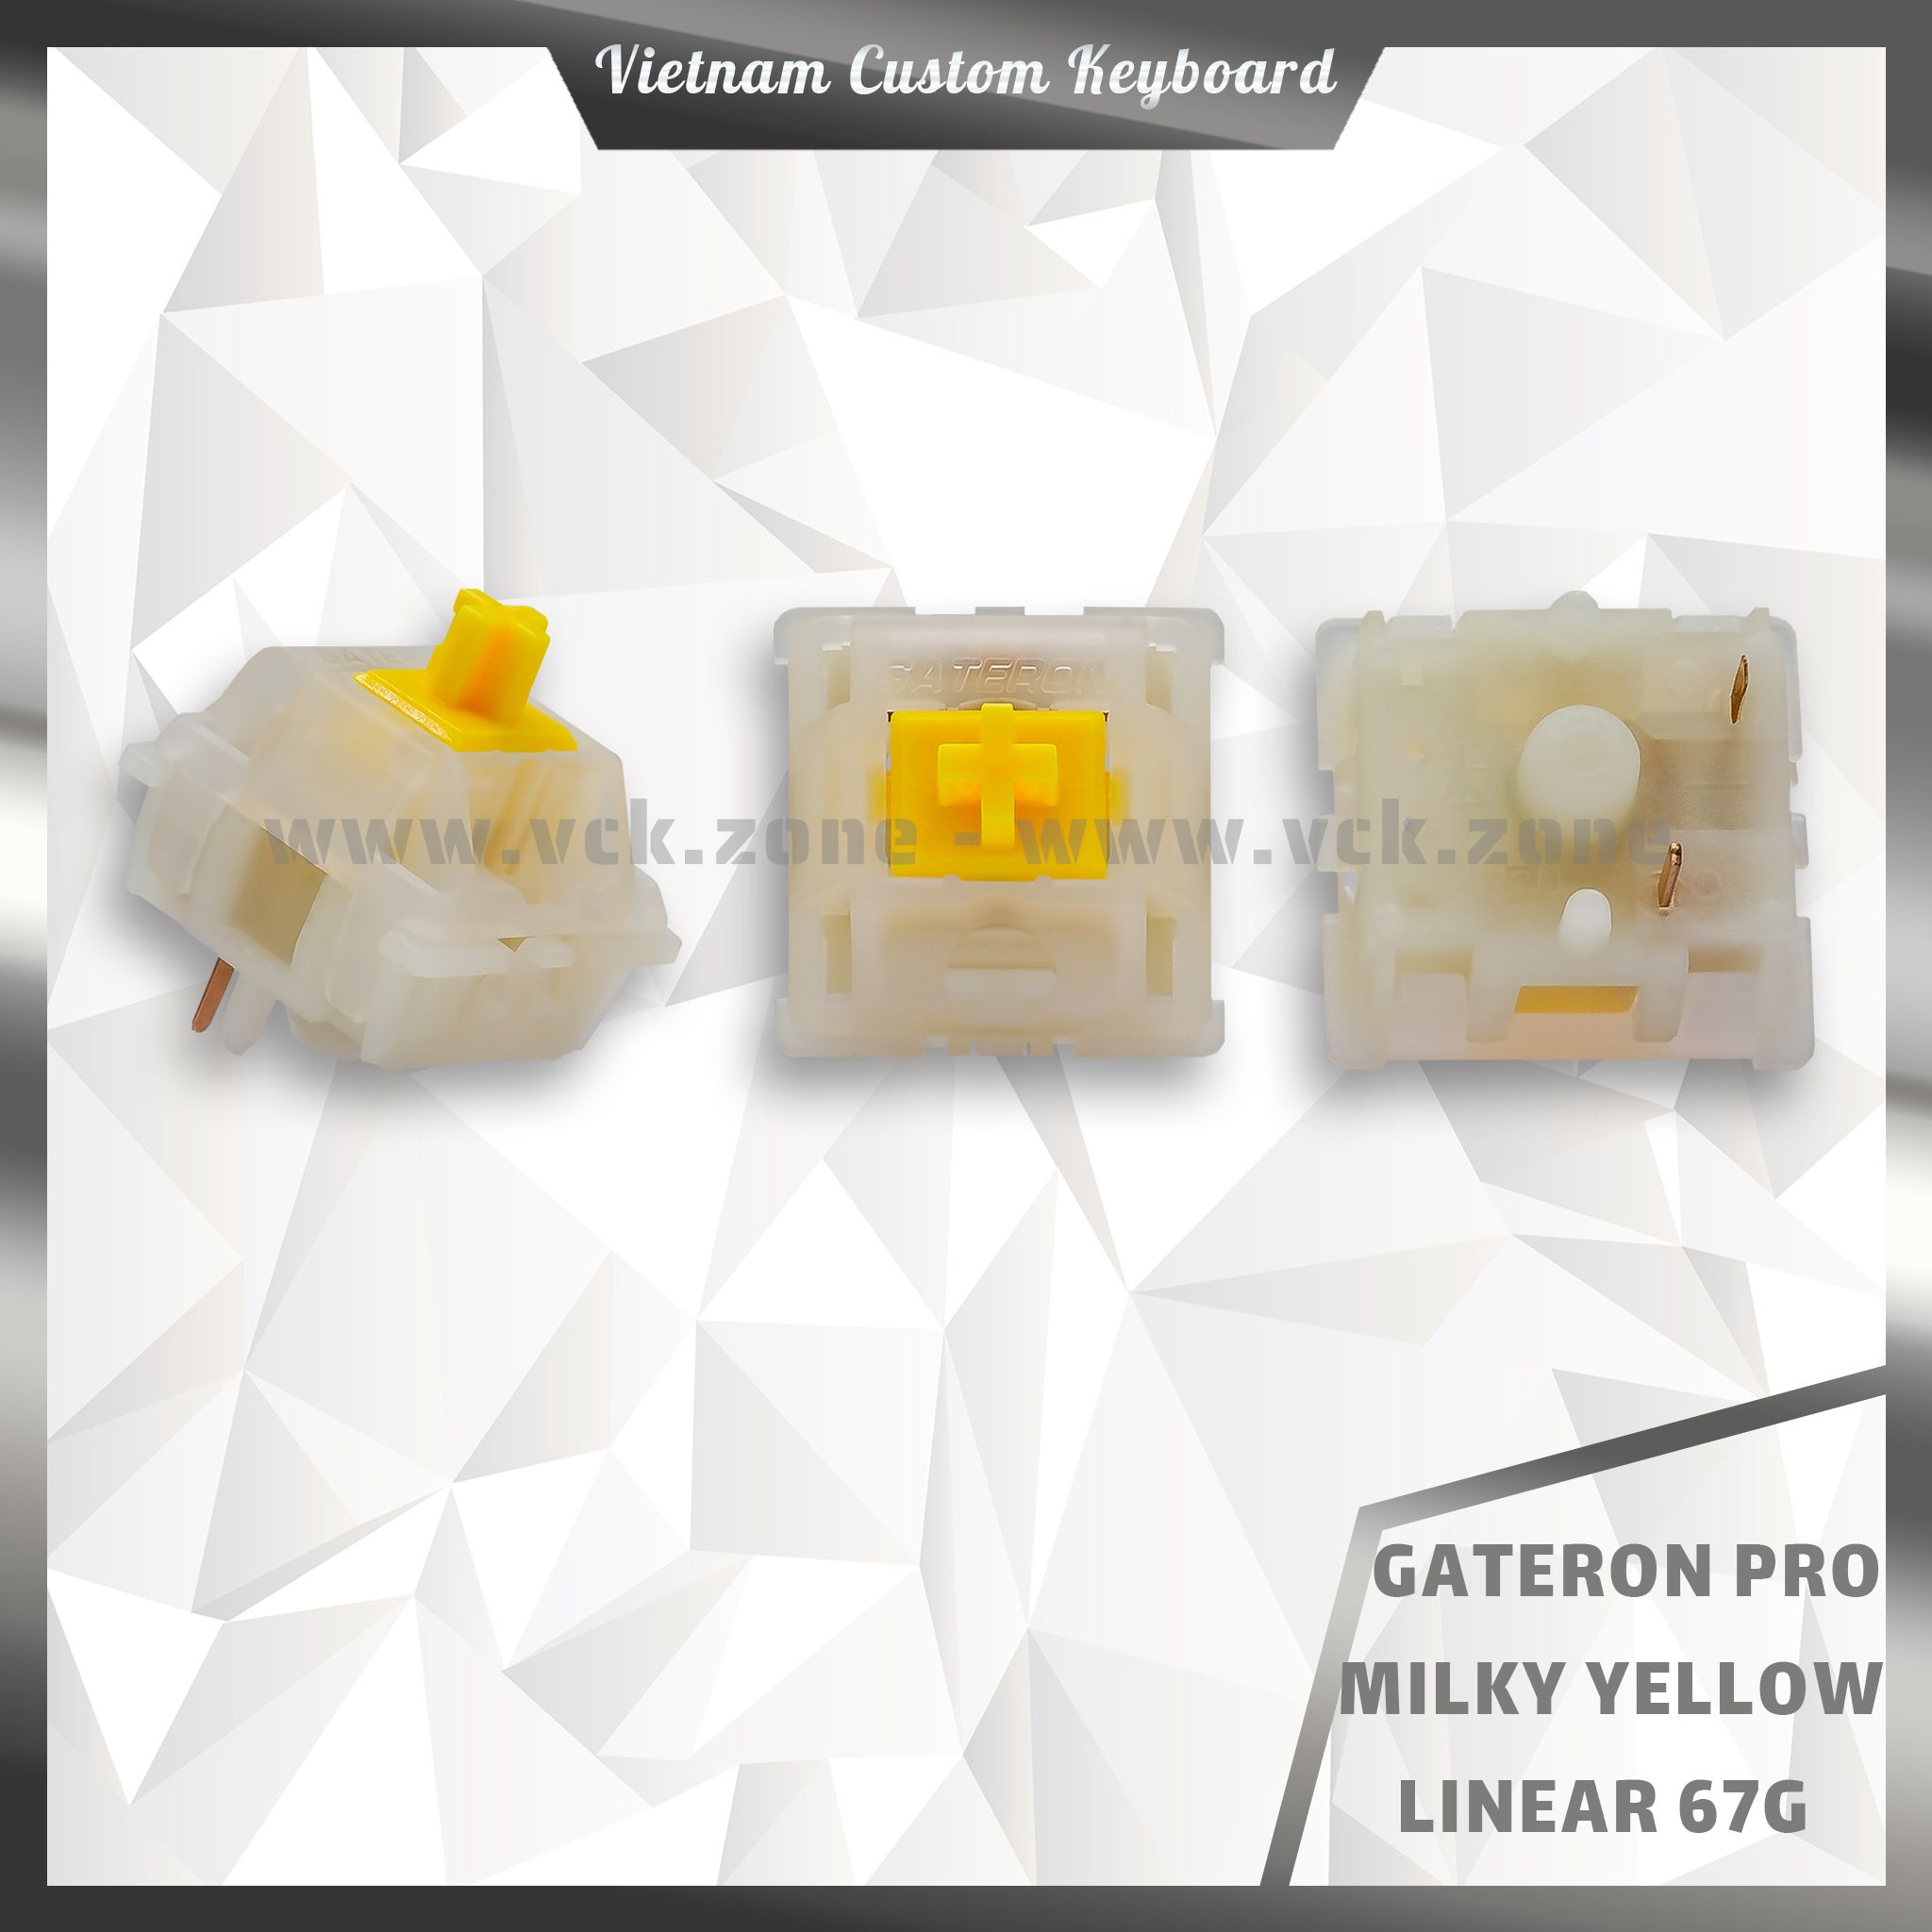  Gateron Pro Milky Yellow Linear Switch 67g 